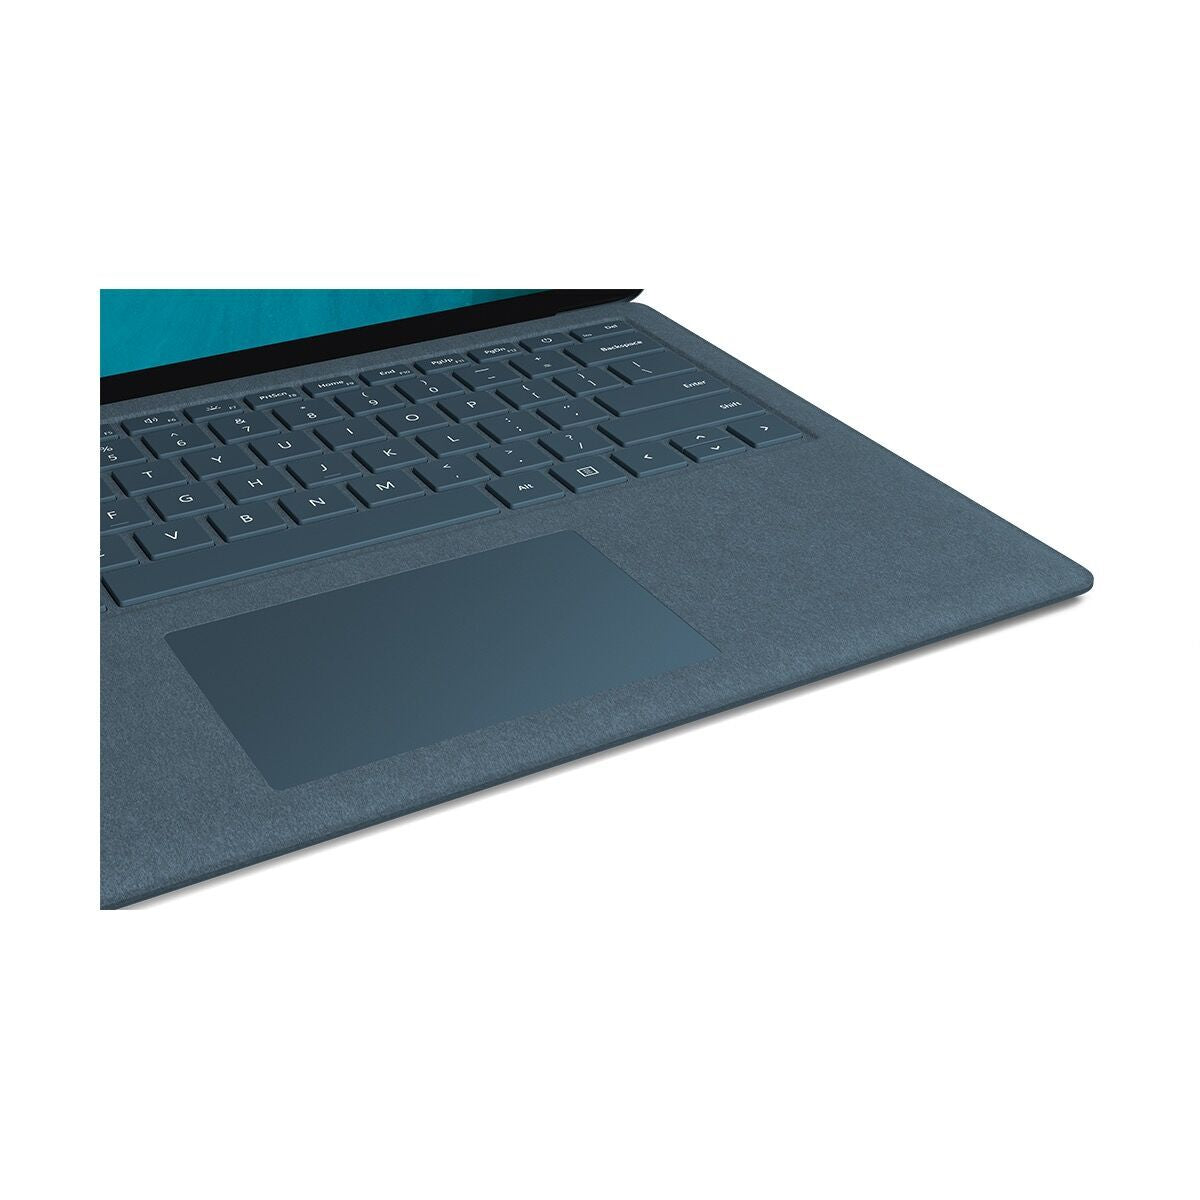 Microsoft Surface Laptop 2 Core i7 8GB 256GB - Cobalt Blue - LQQ-00038